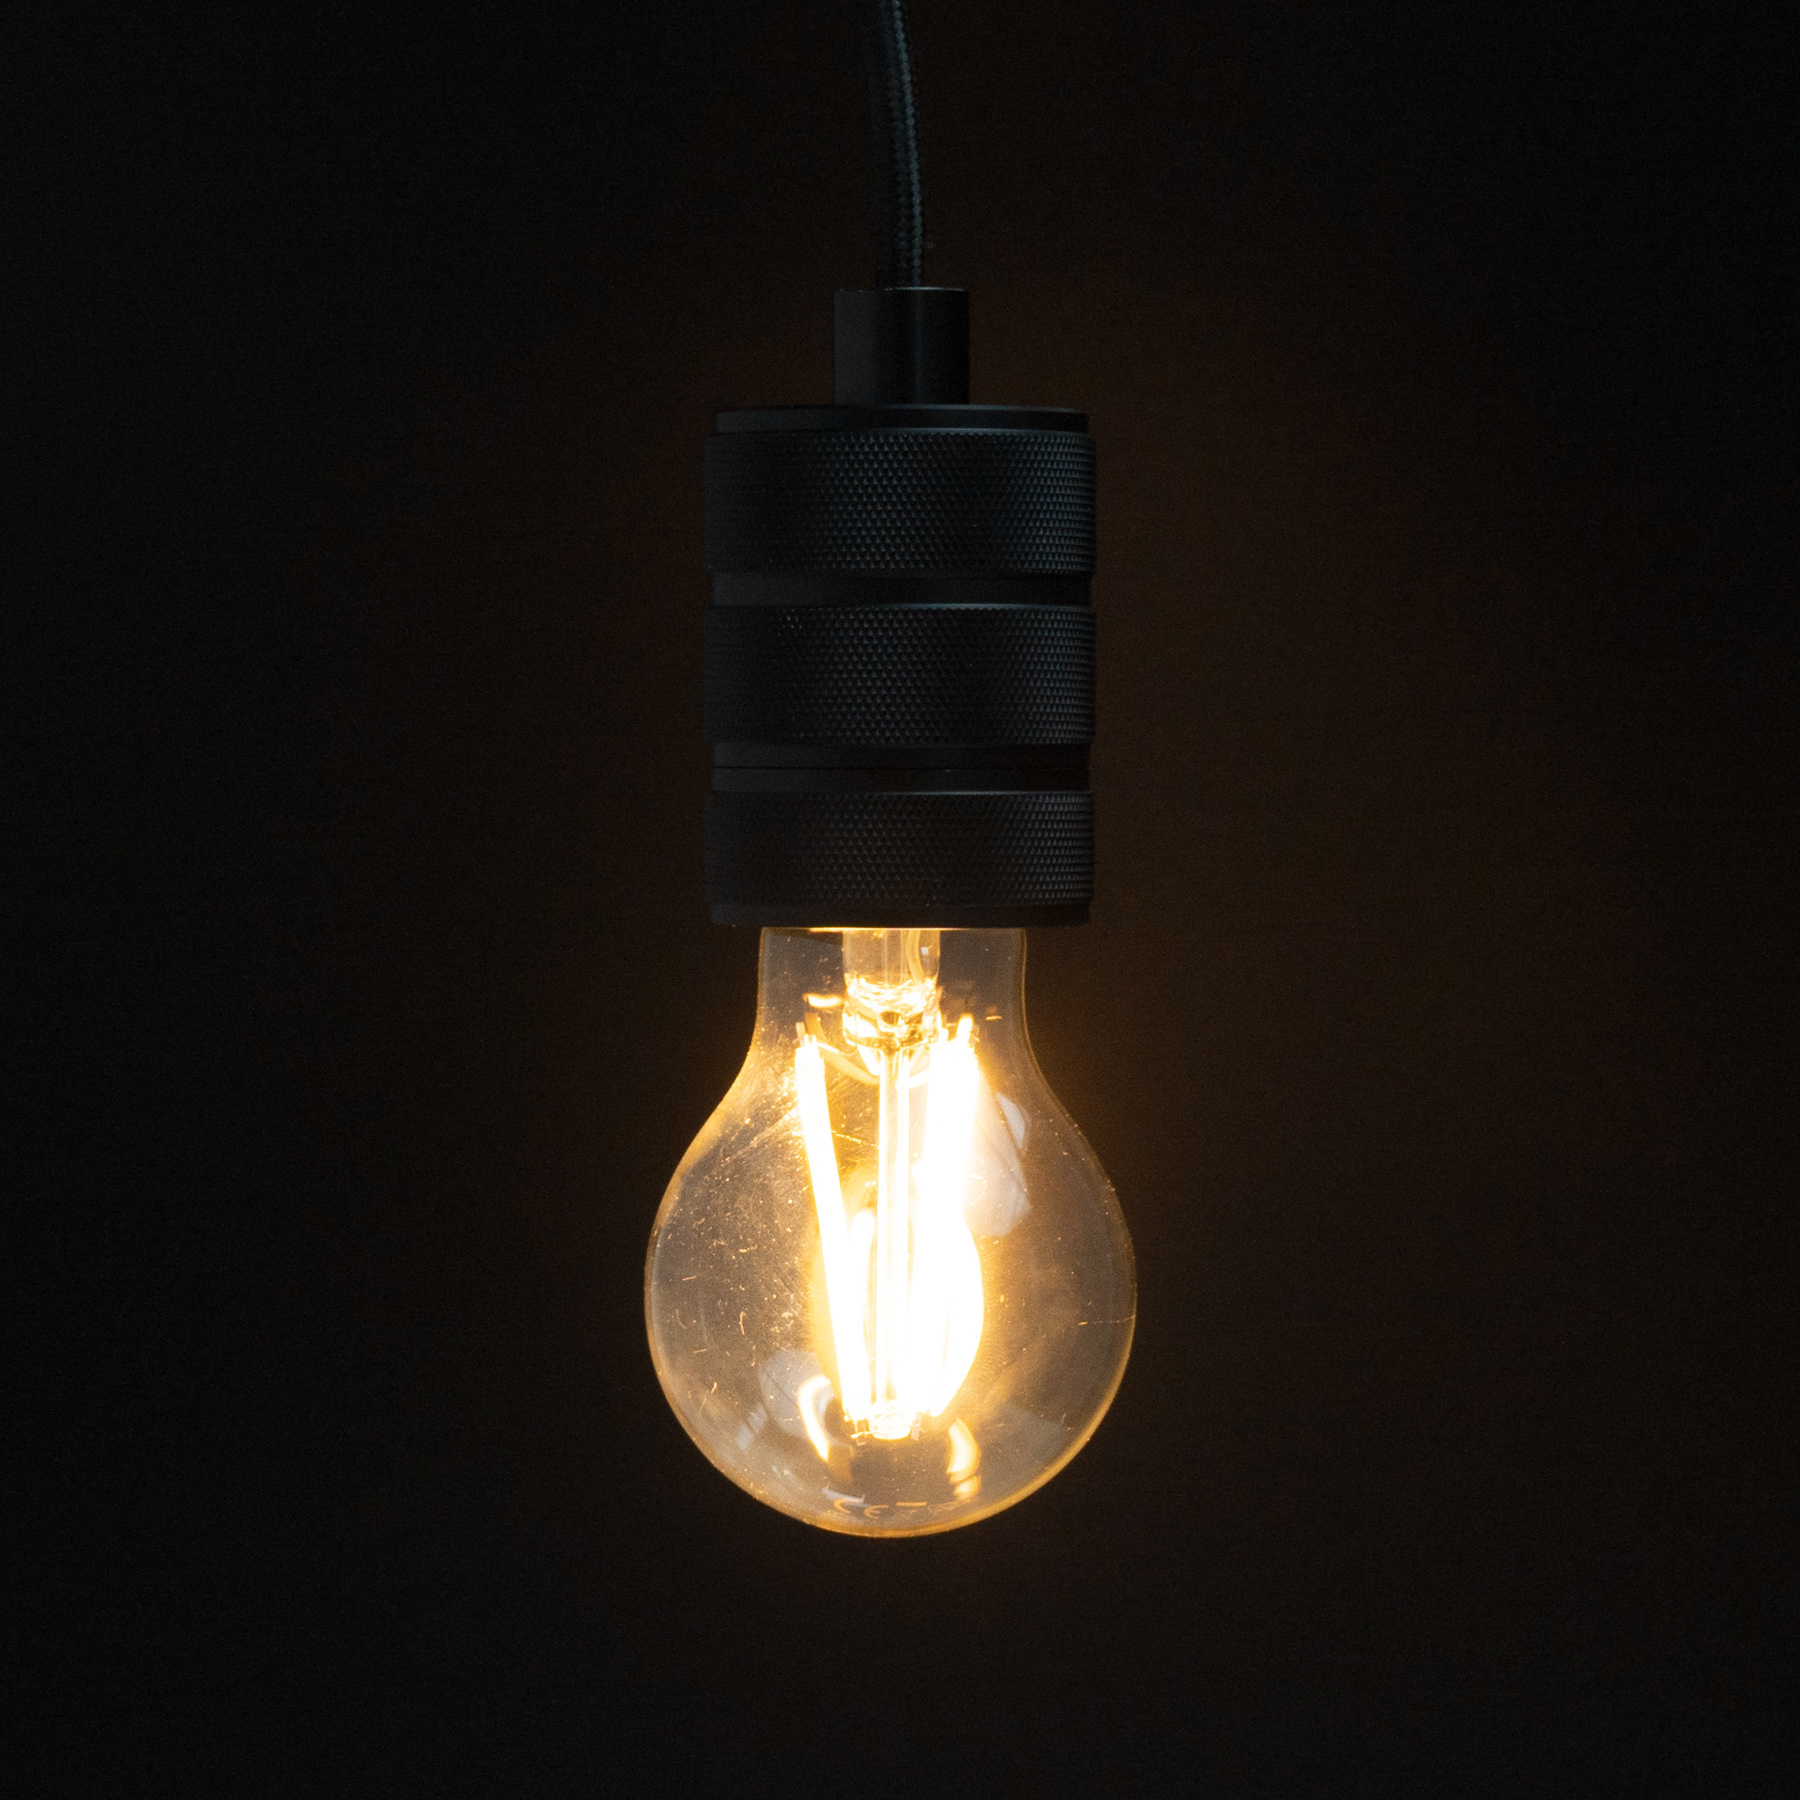 Ampoule LED Filament Cristal OSRAM E27 18W 2452LM Dimmable • IluminaShop  France